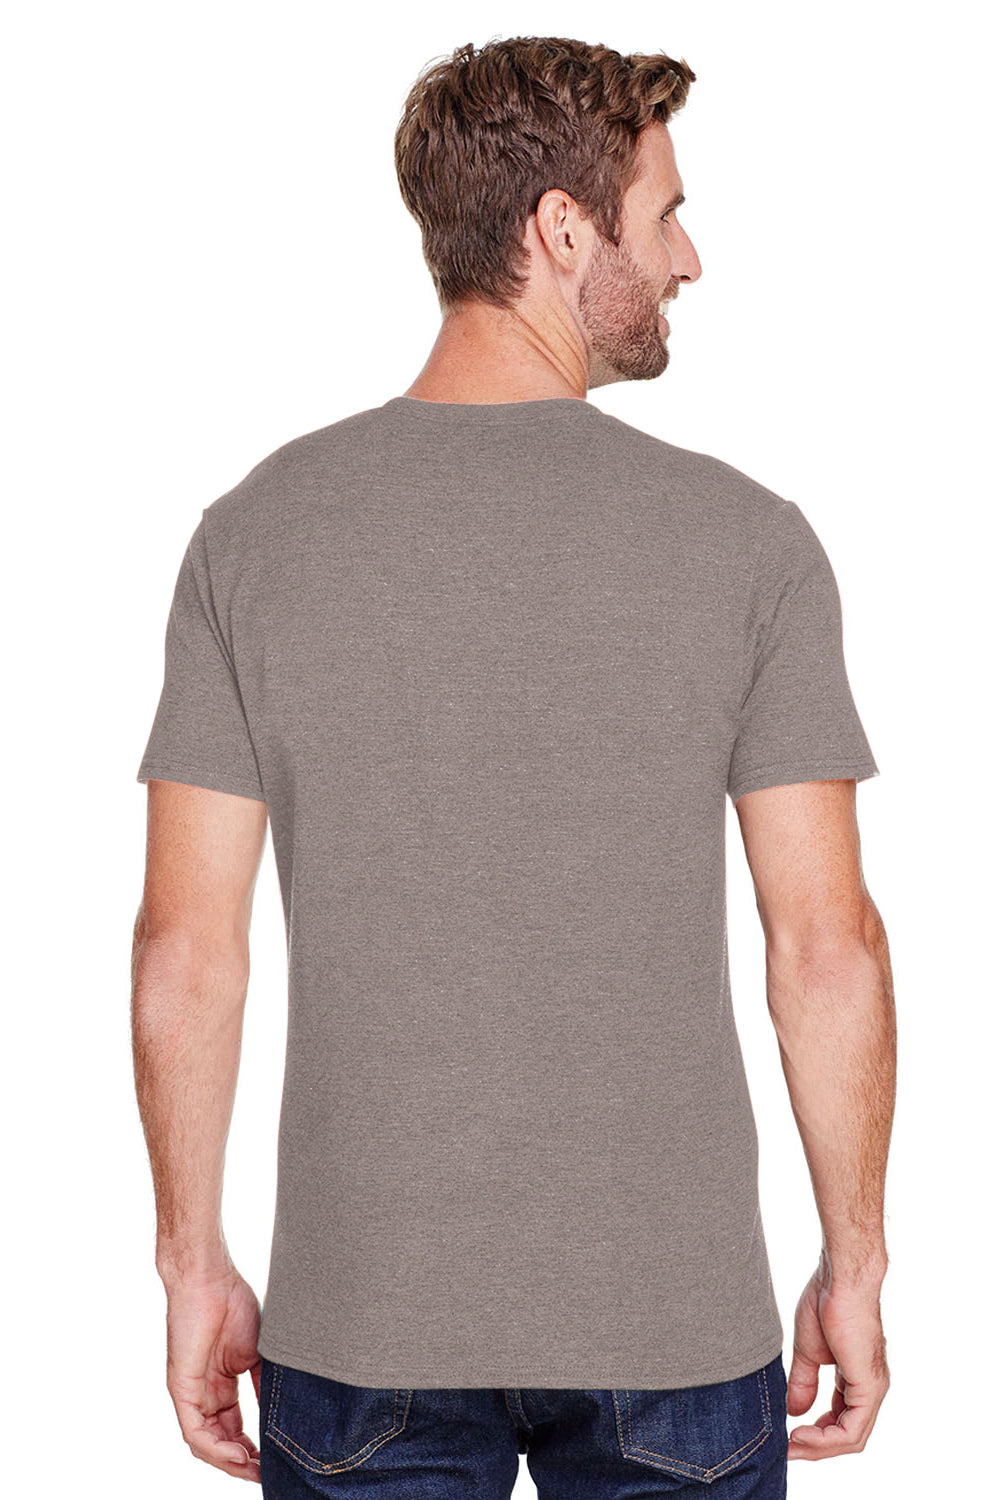 Jerzees 560MR Mens Premium Blend Short Sleeve Crewneck T-Shirt Heather Taupe Brown Back